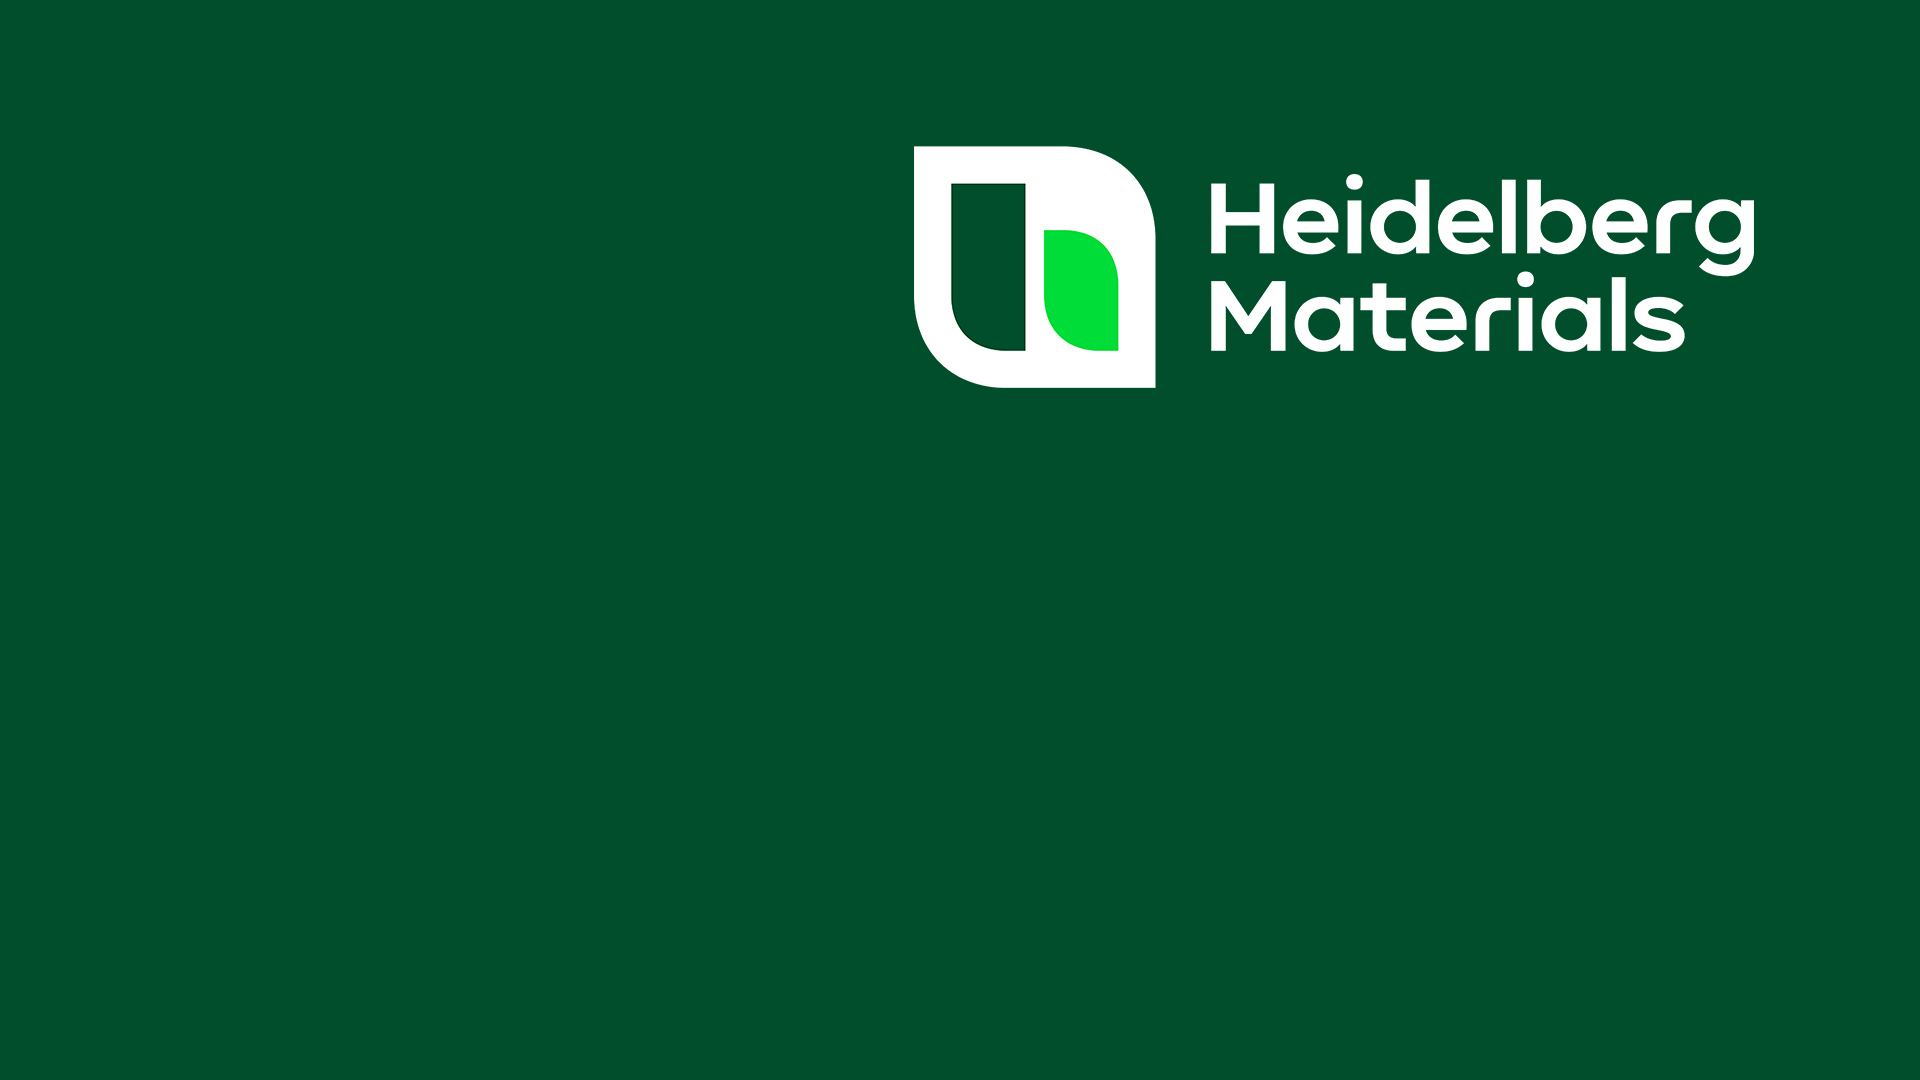 Heidelberg Materials rebrand